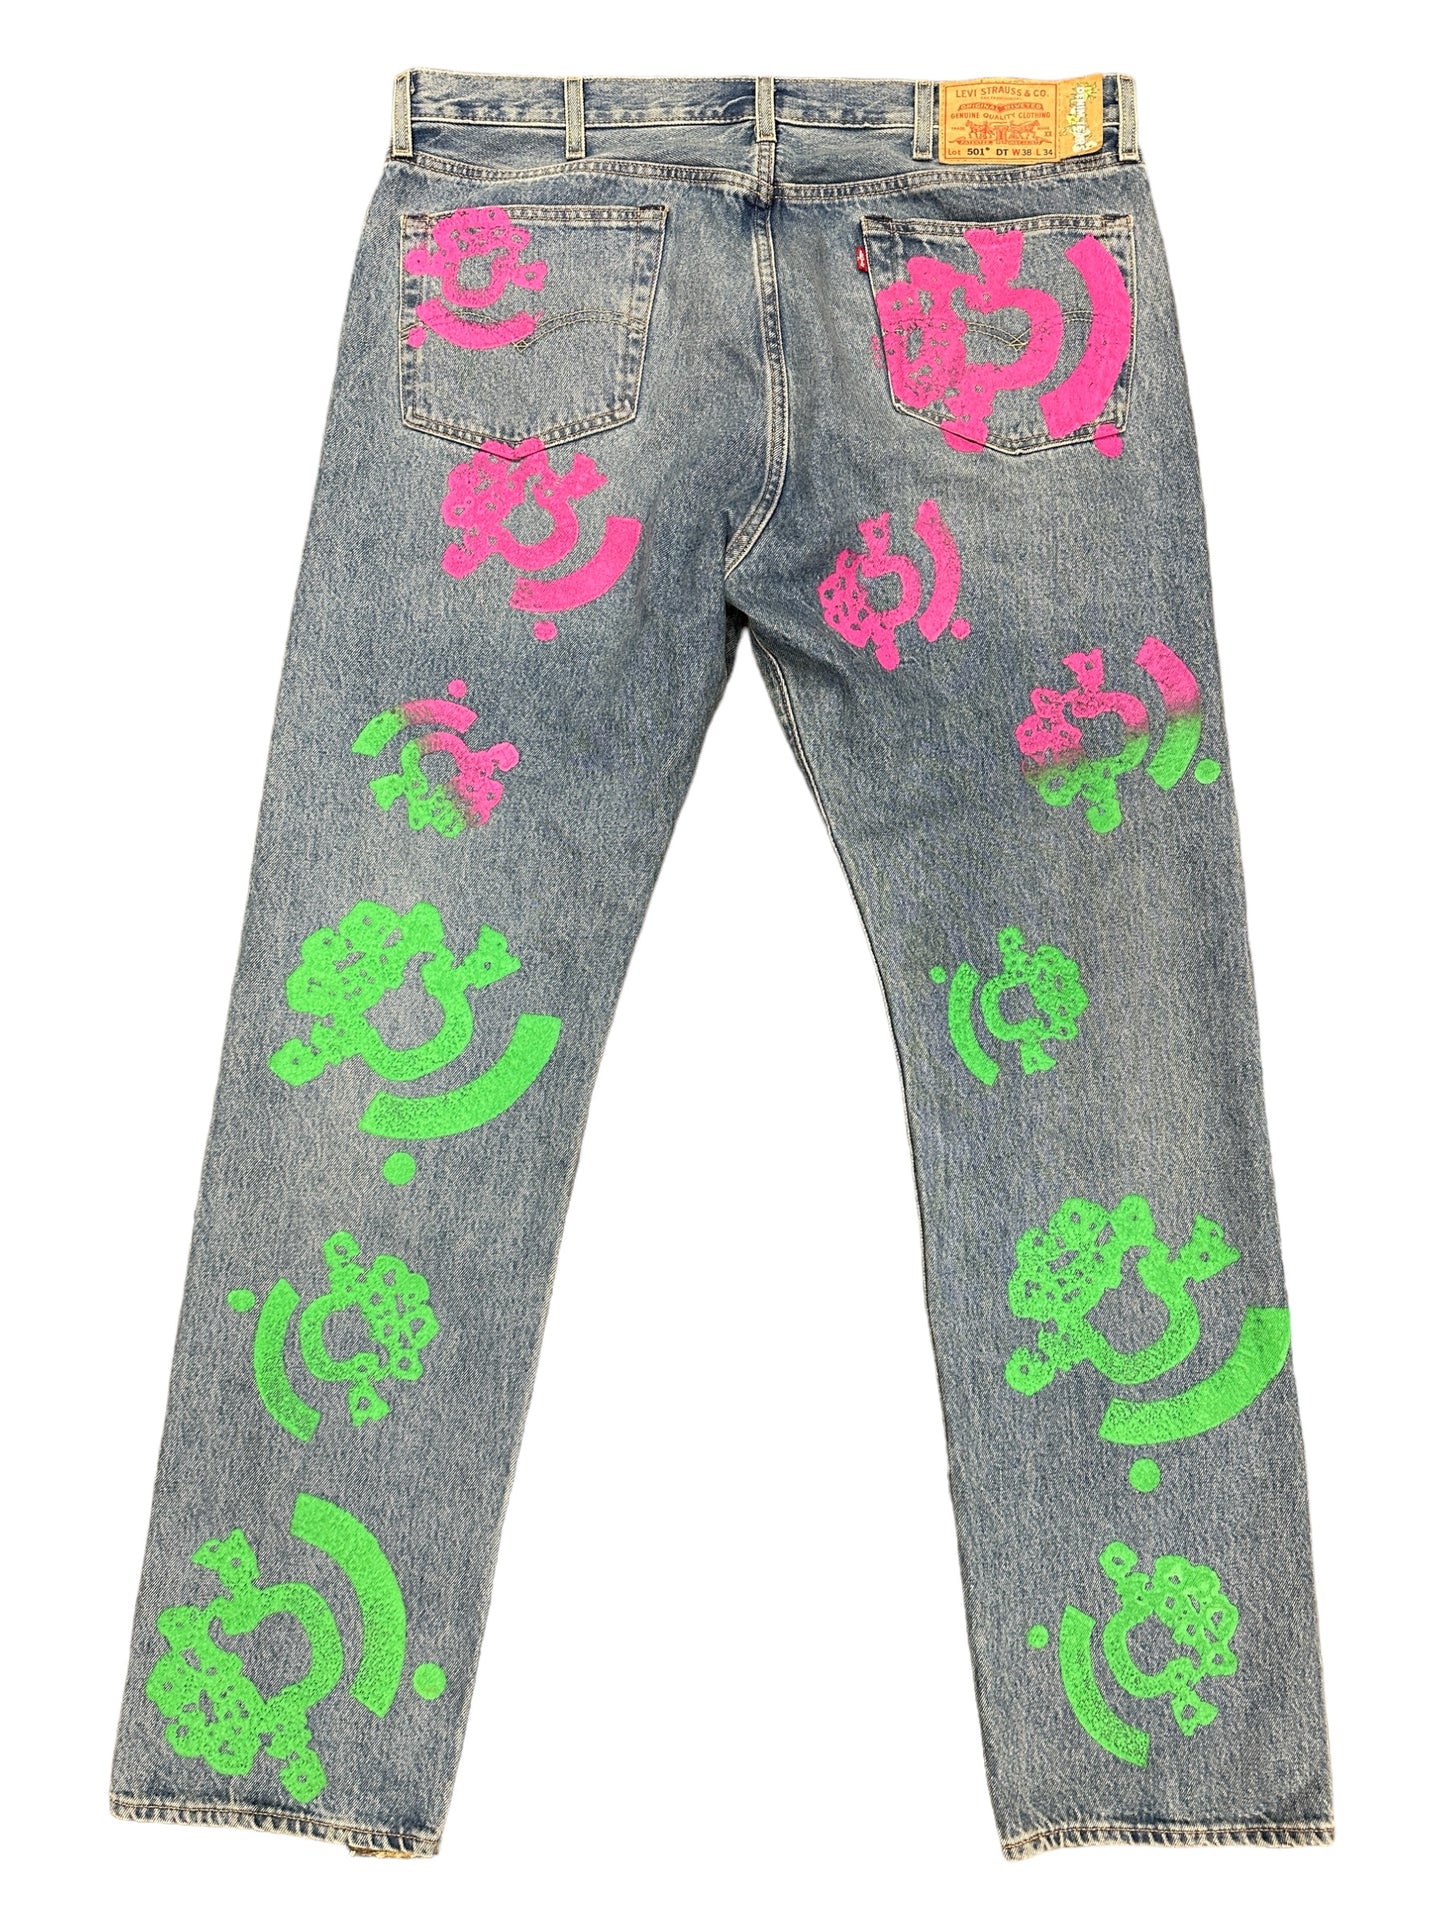 Denim Tears x Bstroy Cotton Wreath Jeans Light Wash Indigo Size 38x34 Pre-owned